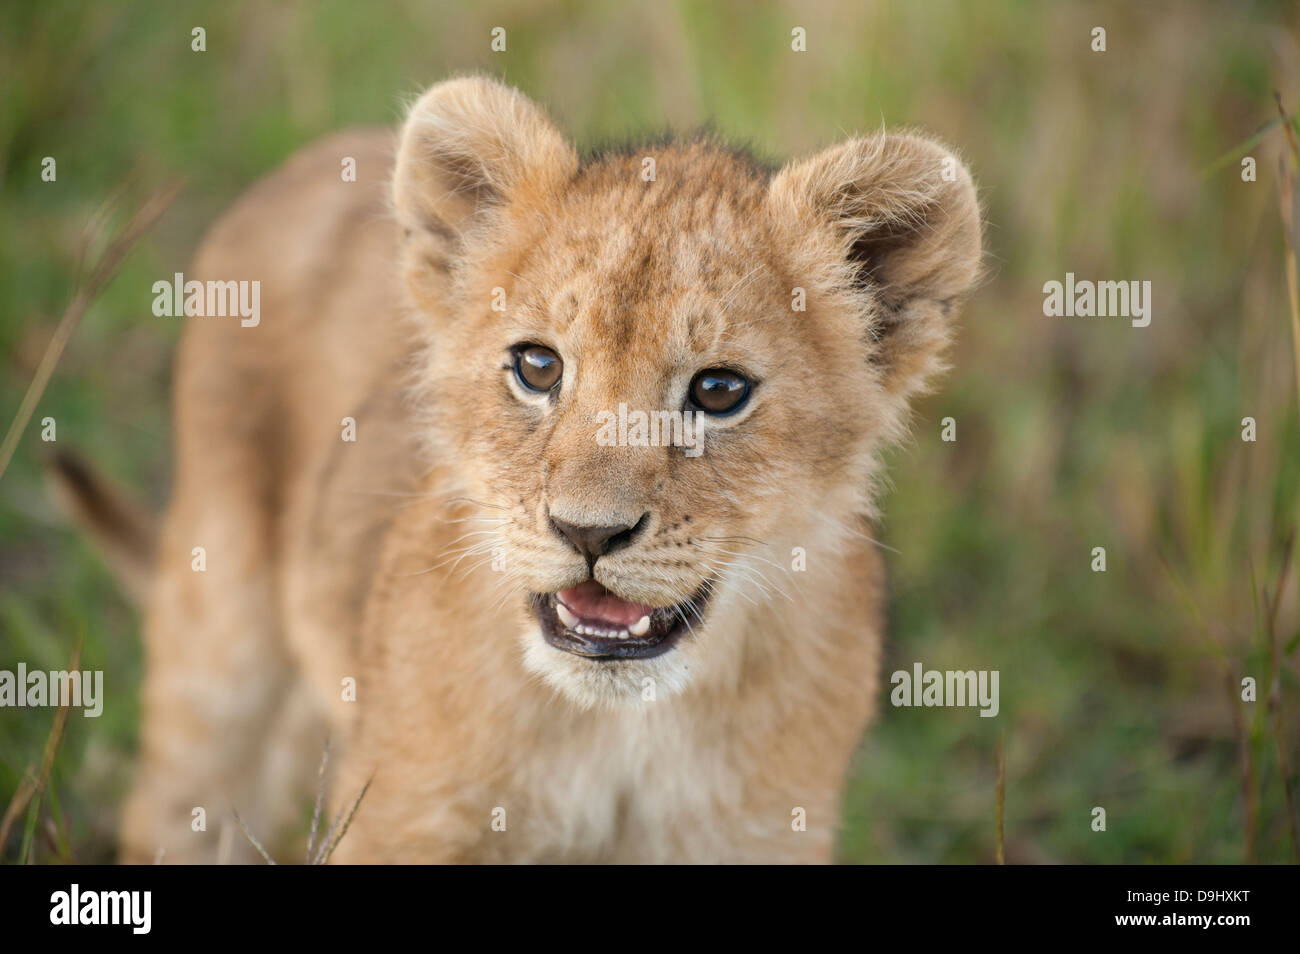 Lion cub close-up, Masai Mara, Kenya Stock Photo